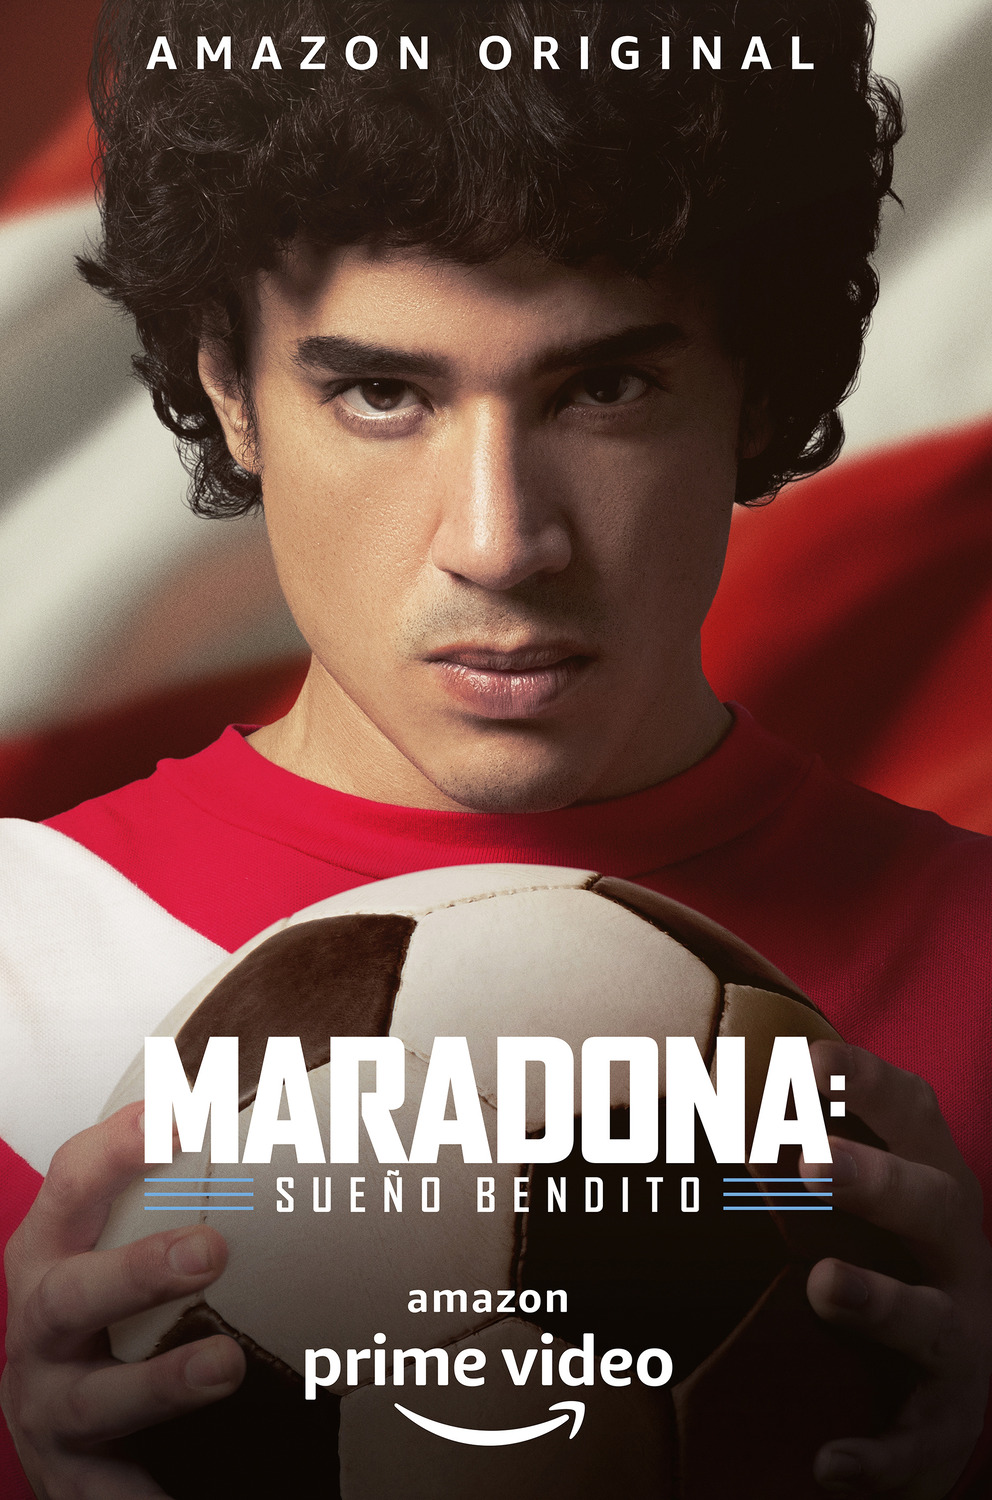 Extra Large Movie Poster Image for Maradona, sueño bendito (#12 of 21)